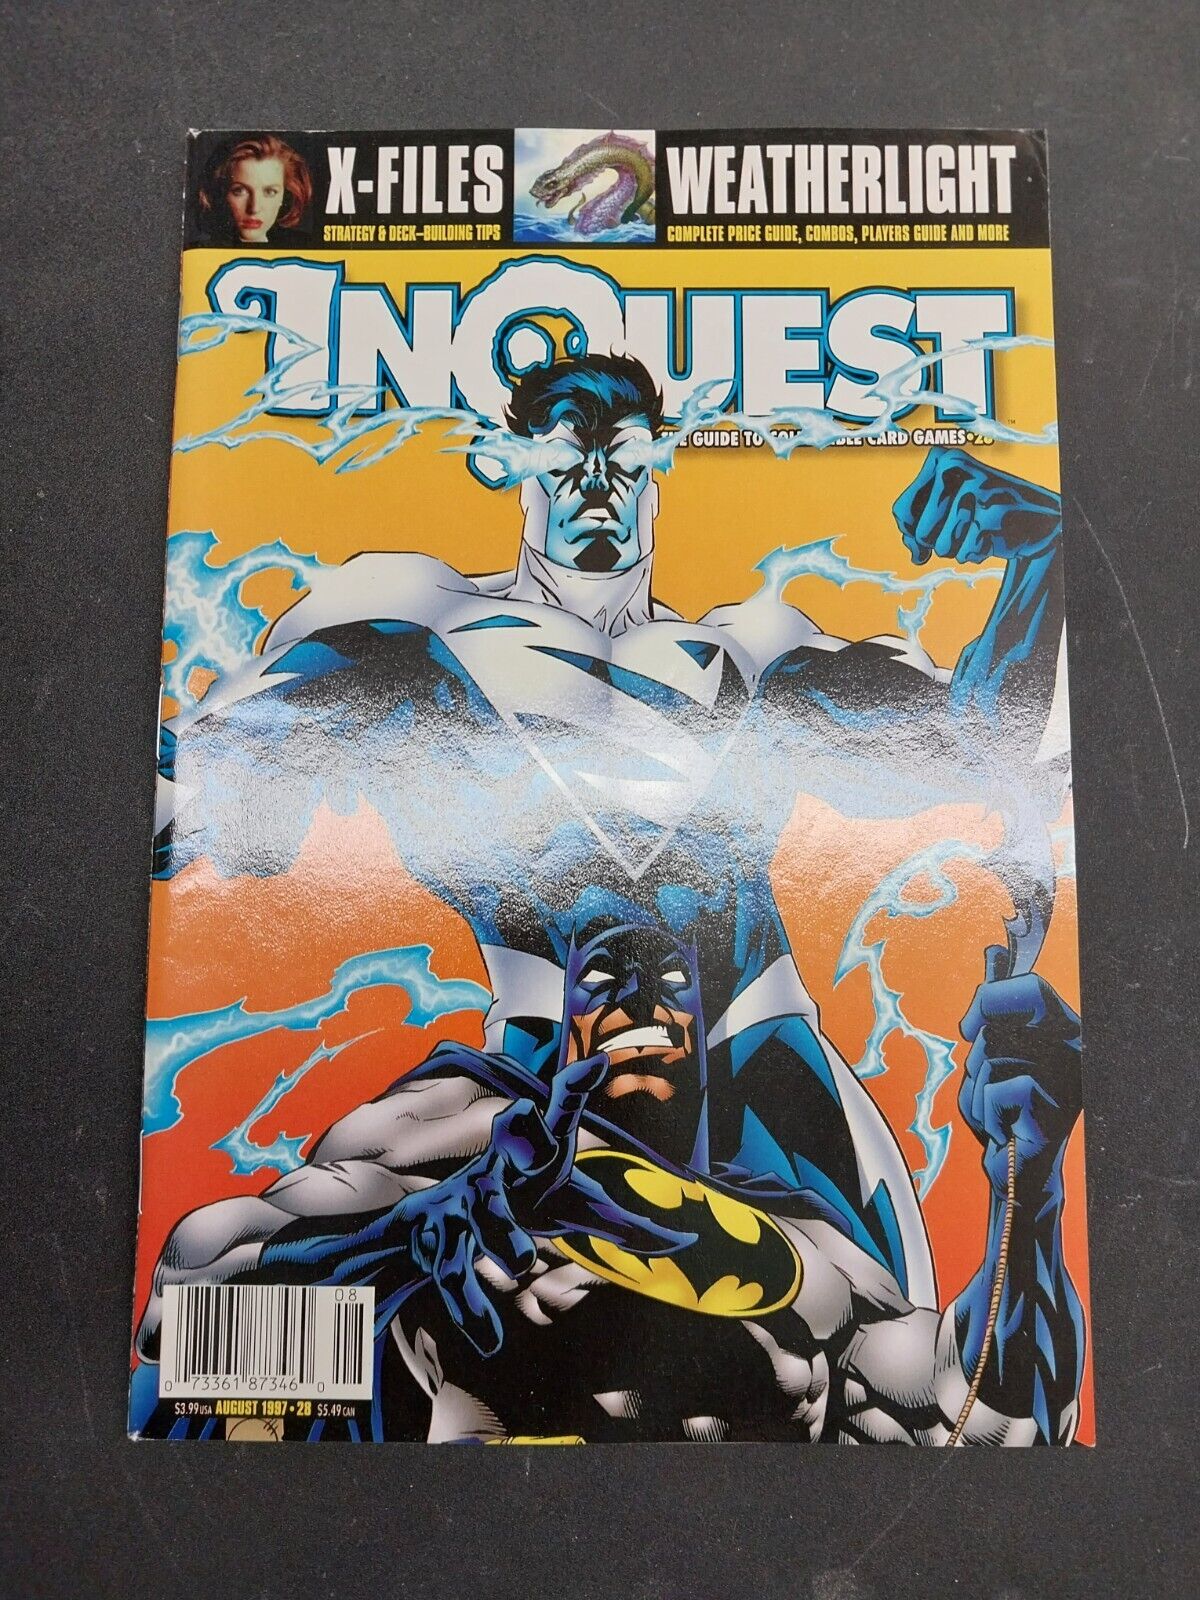 INQUEST Magazine #28, AUGUST 1997, SUPERMAN/BATMAN Cover, WEATHERLIGHT, X-FILES